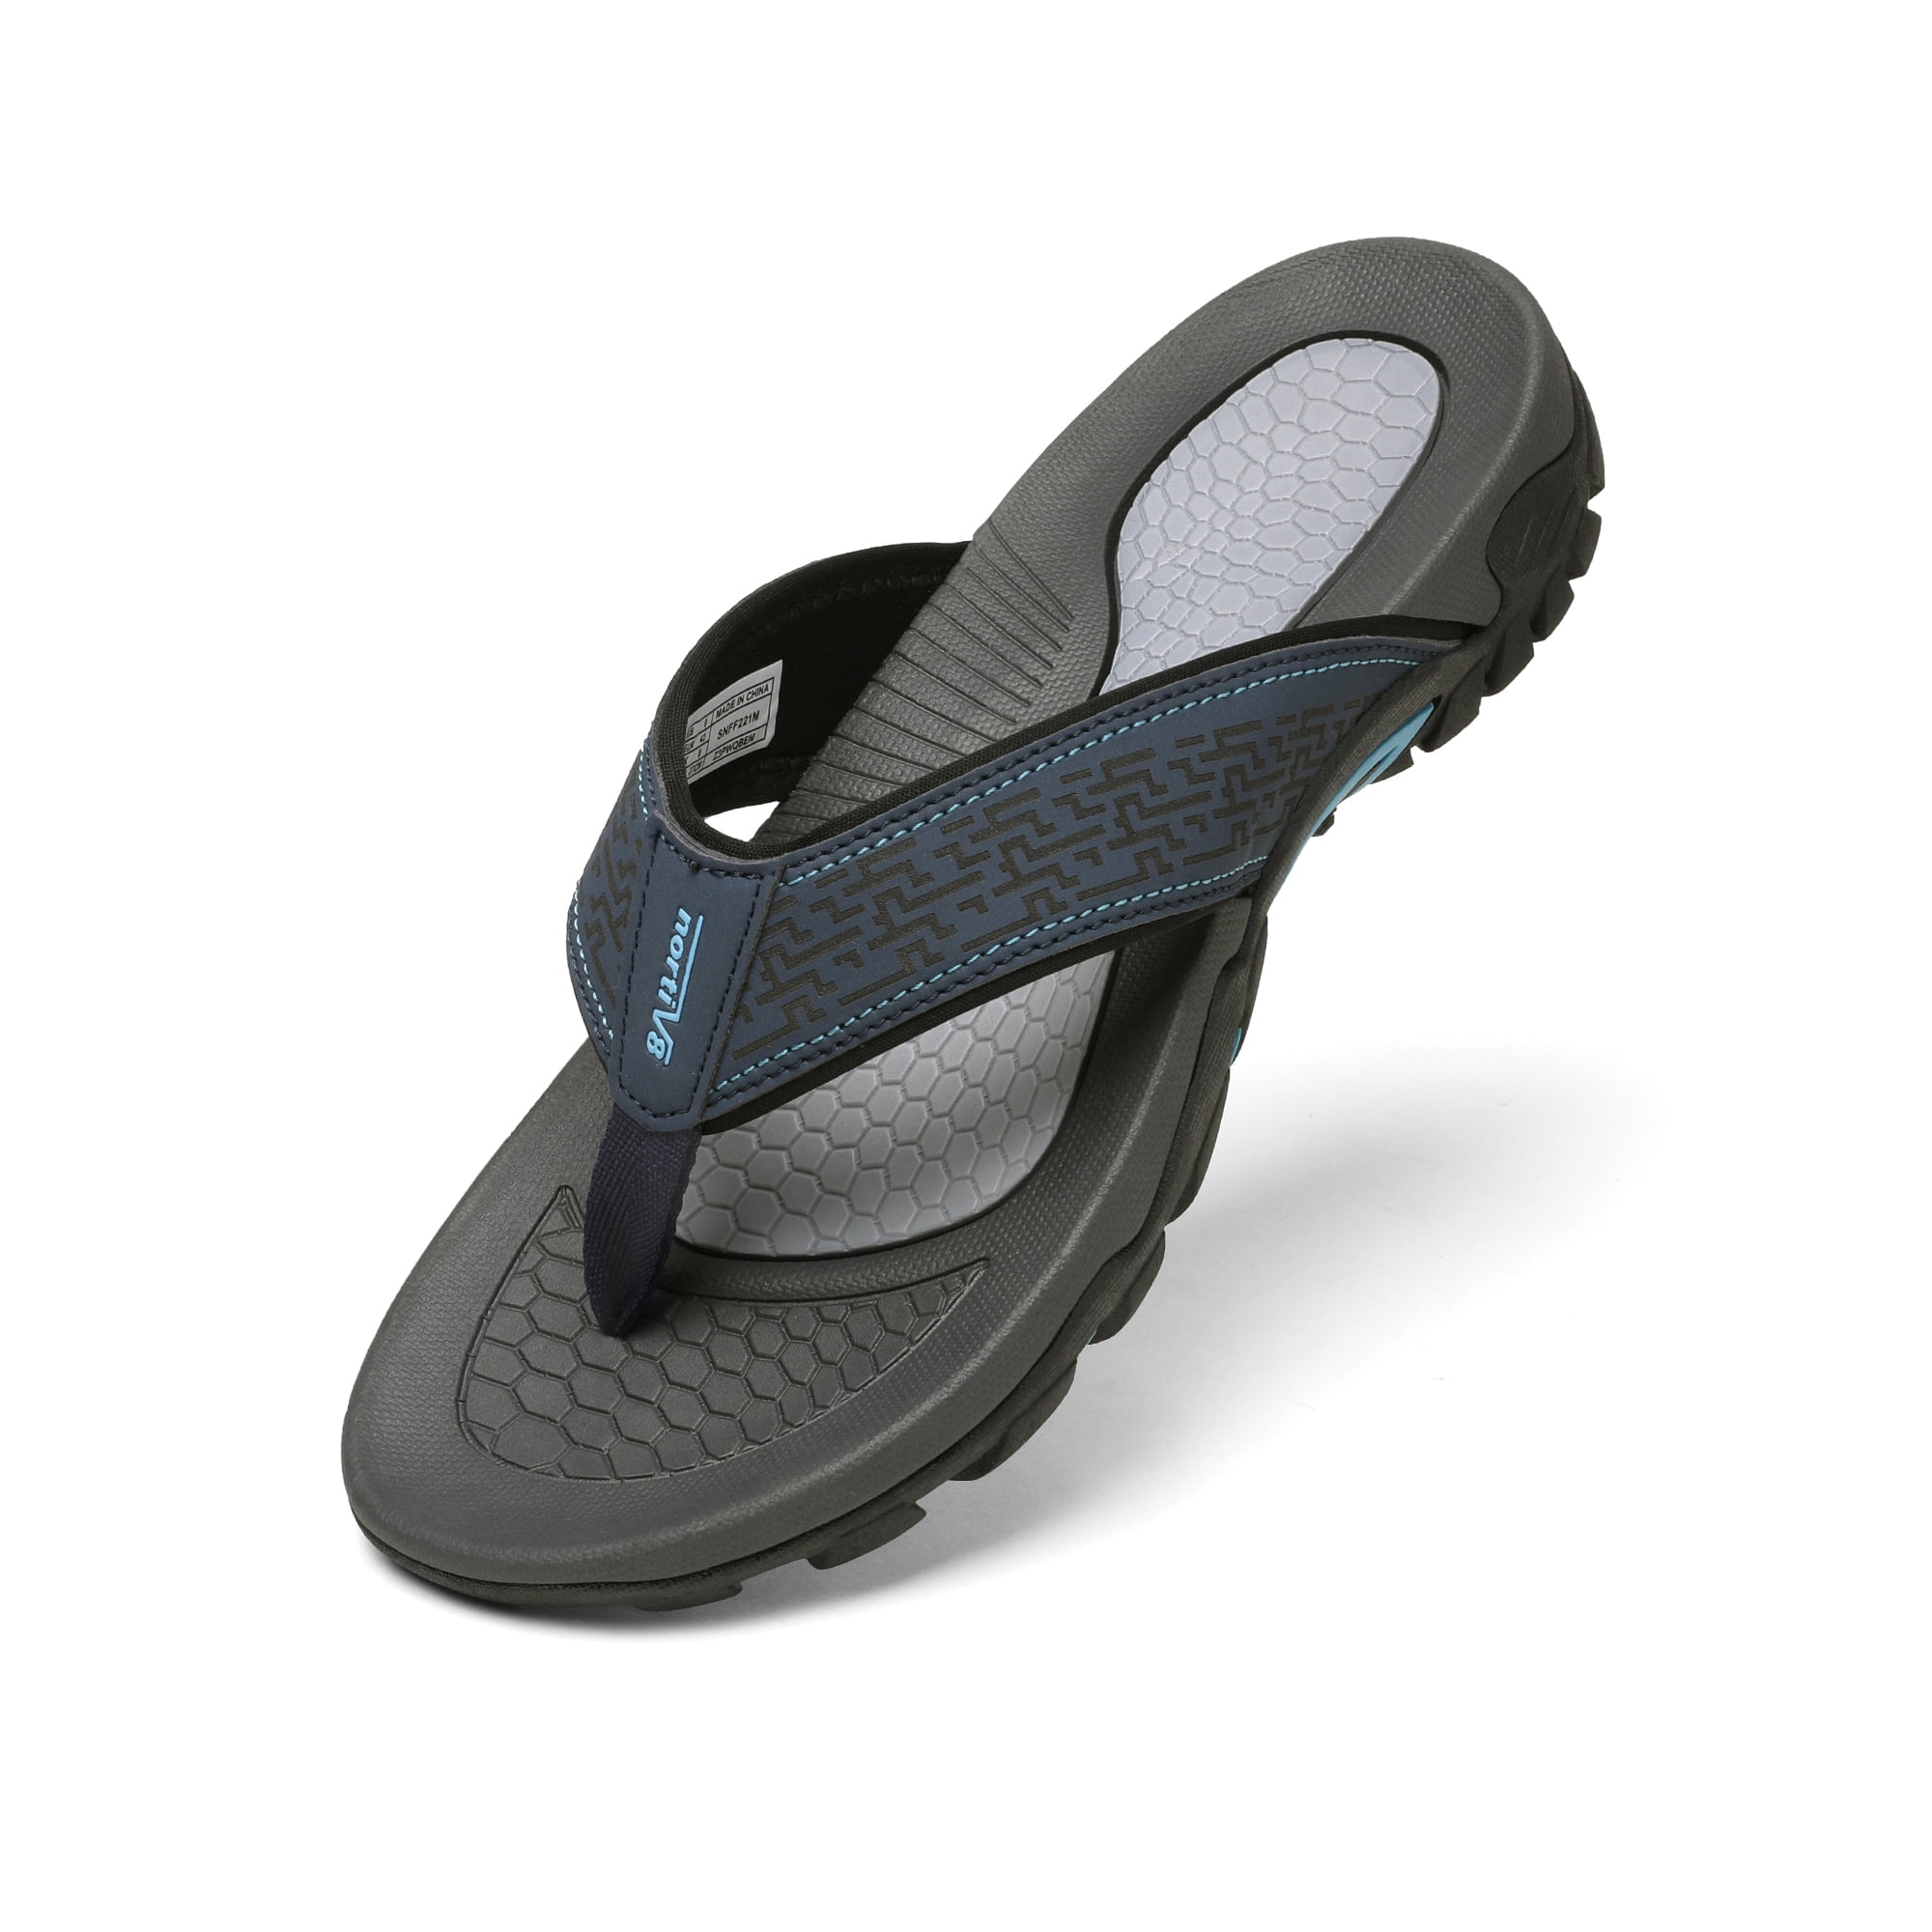 Flip Flops for Men~HOTSELL〔☀ㄥ☀〕Adults Brasil Flip Flops Mens Flip Flops Color Stripe Mules Lightweight Slippers Sandals Comfy Summer Shoes for Beach/Pool Size 6-9 UK